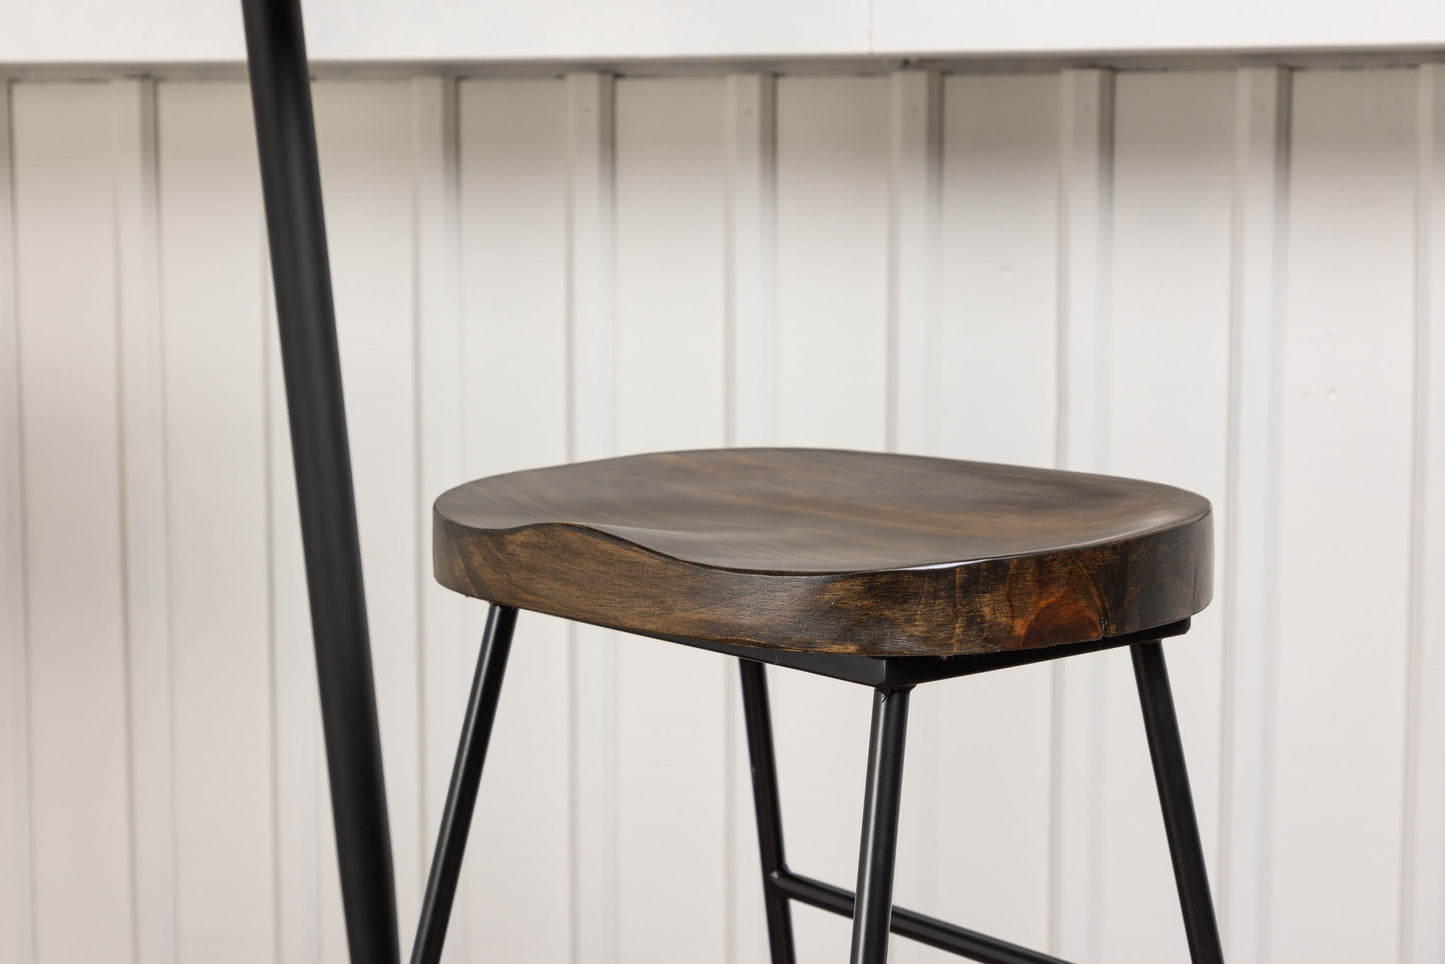 Plaza barbord - sort / sort MDF +Ozark bar stol - Zinklook / Dark Walnut Wood _2